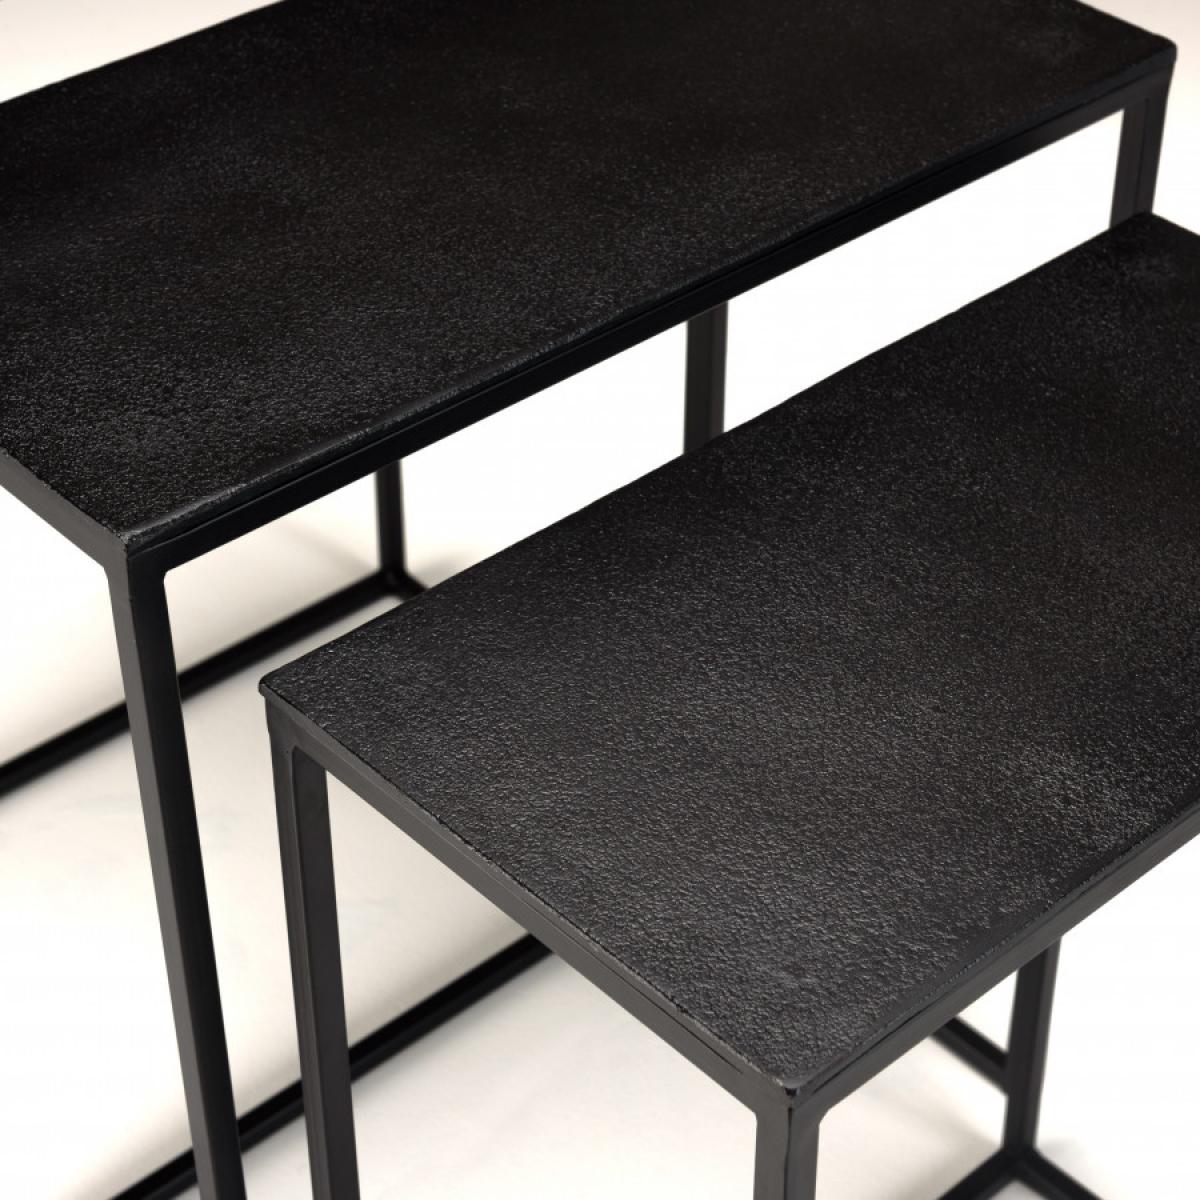 JONAS - Set de 3 tables gigognes rectangulaires aluminium noir pieds métal